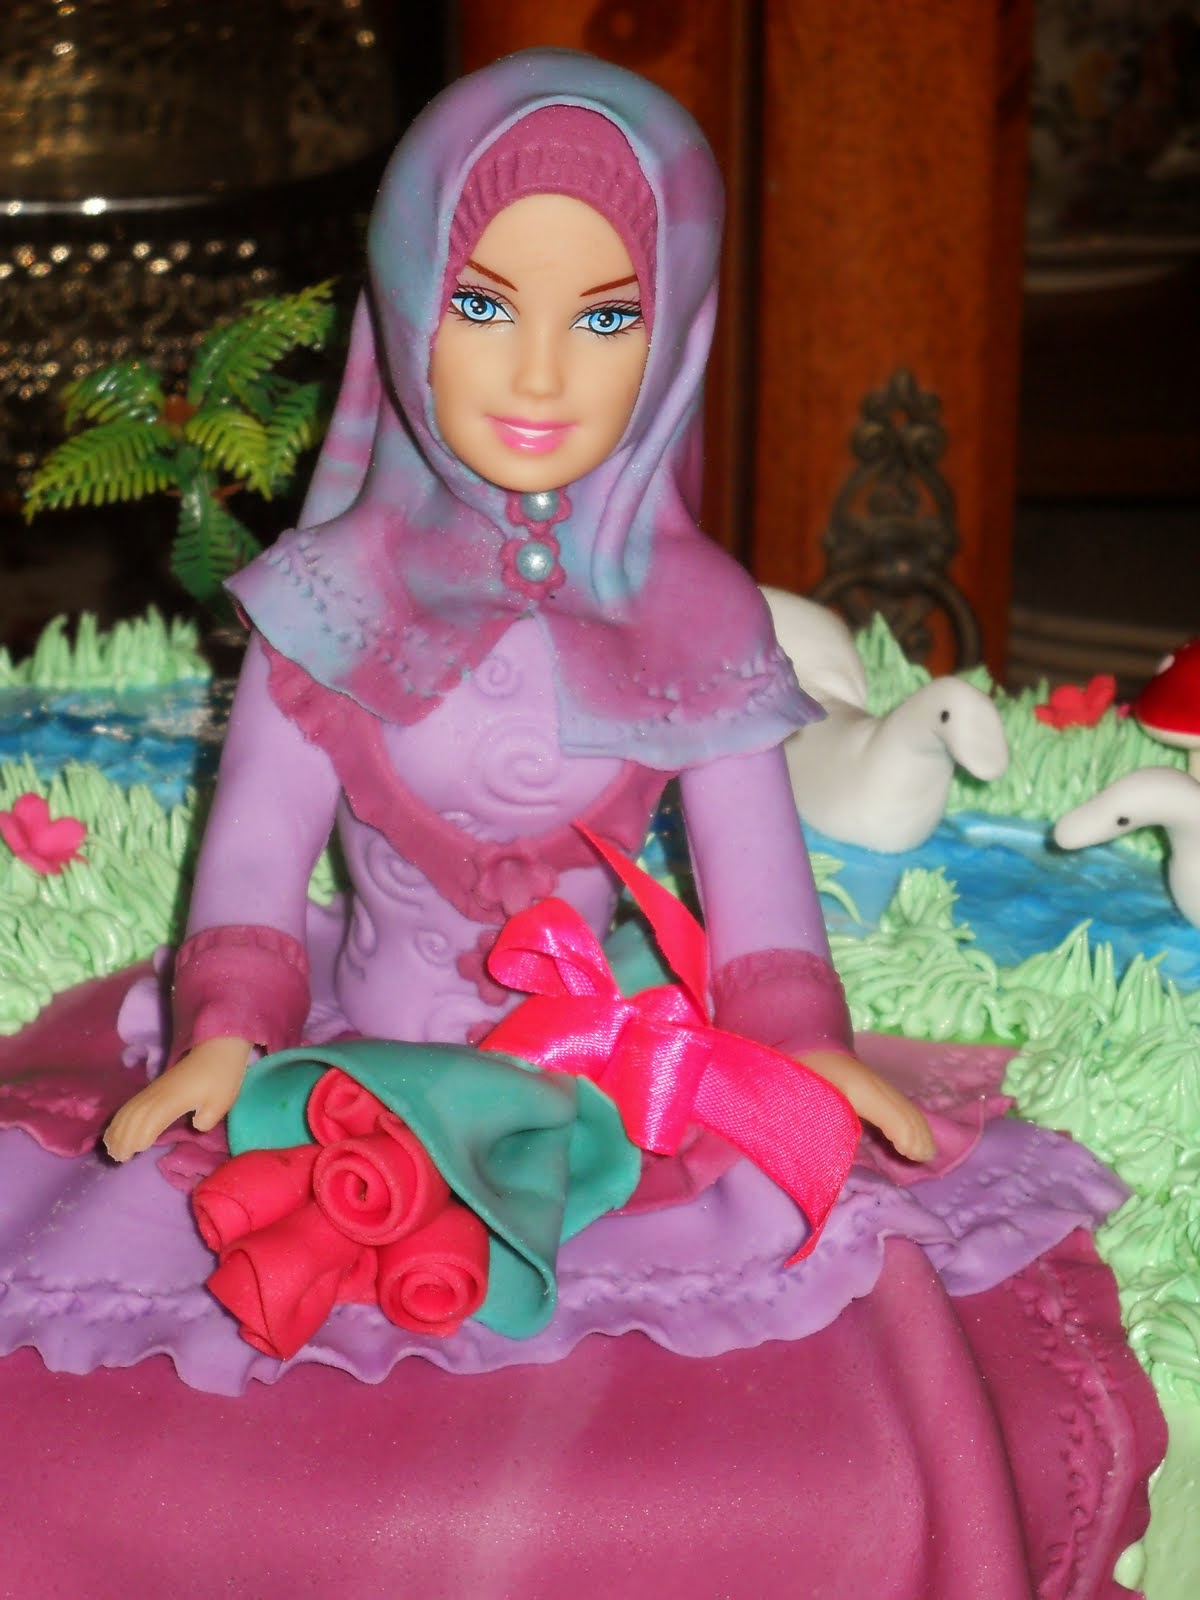 Kumpulan Gambar Boneka Barbie Muslim Cantik Dan Keren Untuk Anak